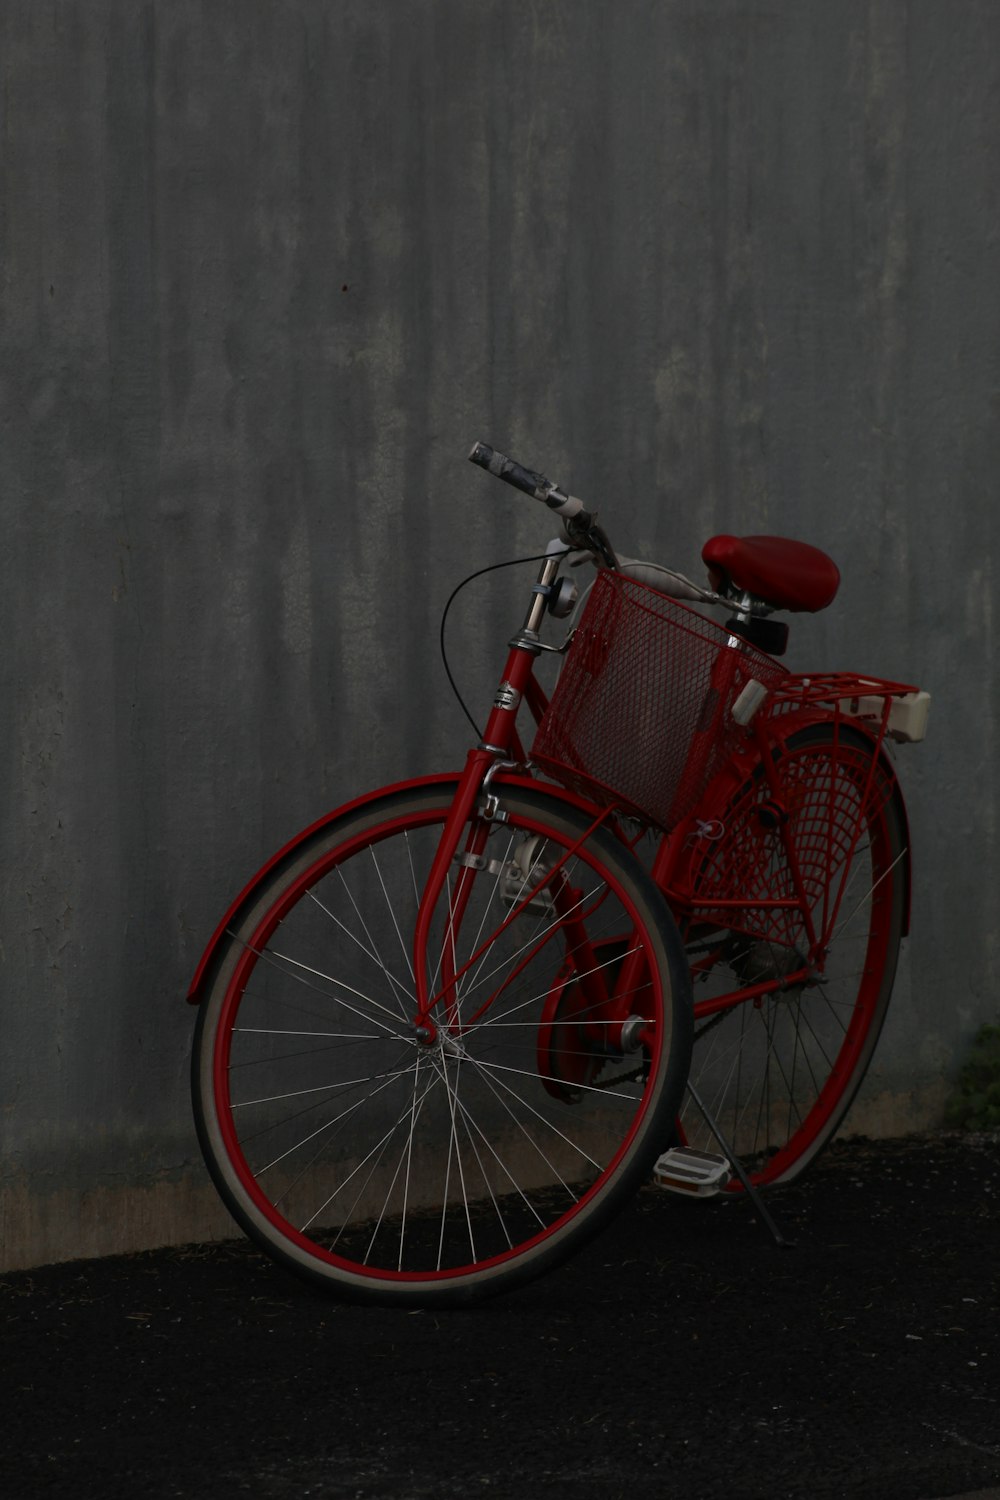 Bicicleta urbana roja y negra